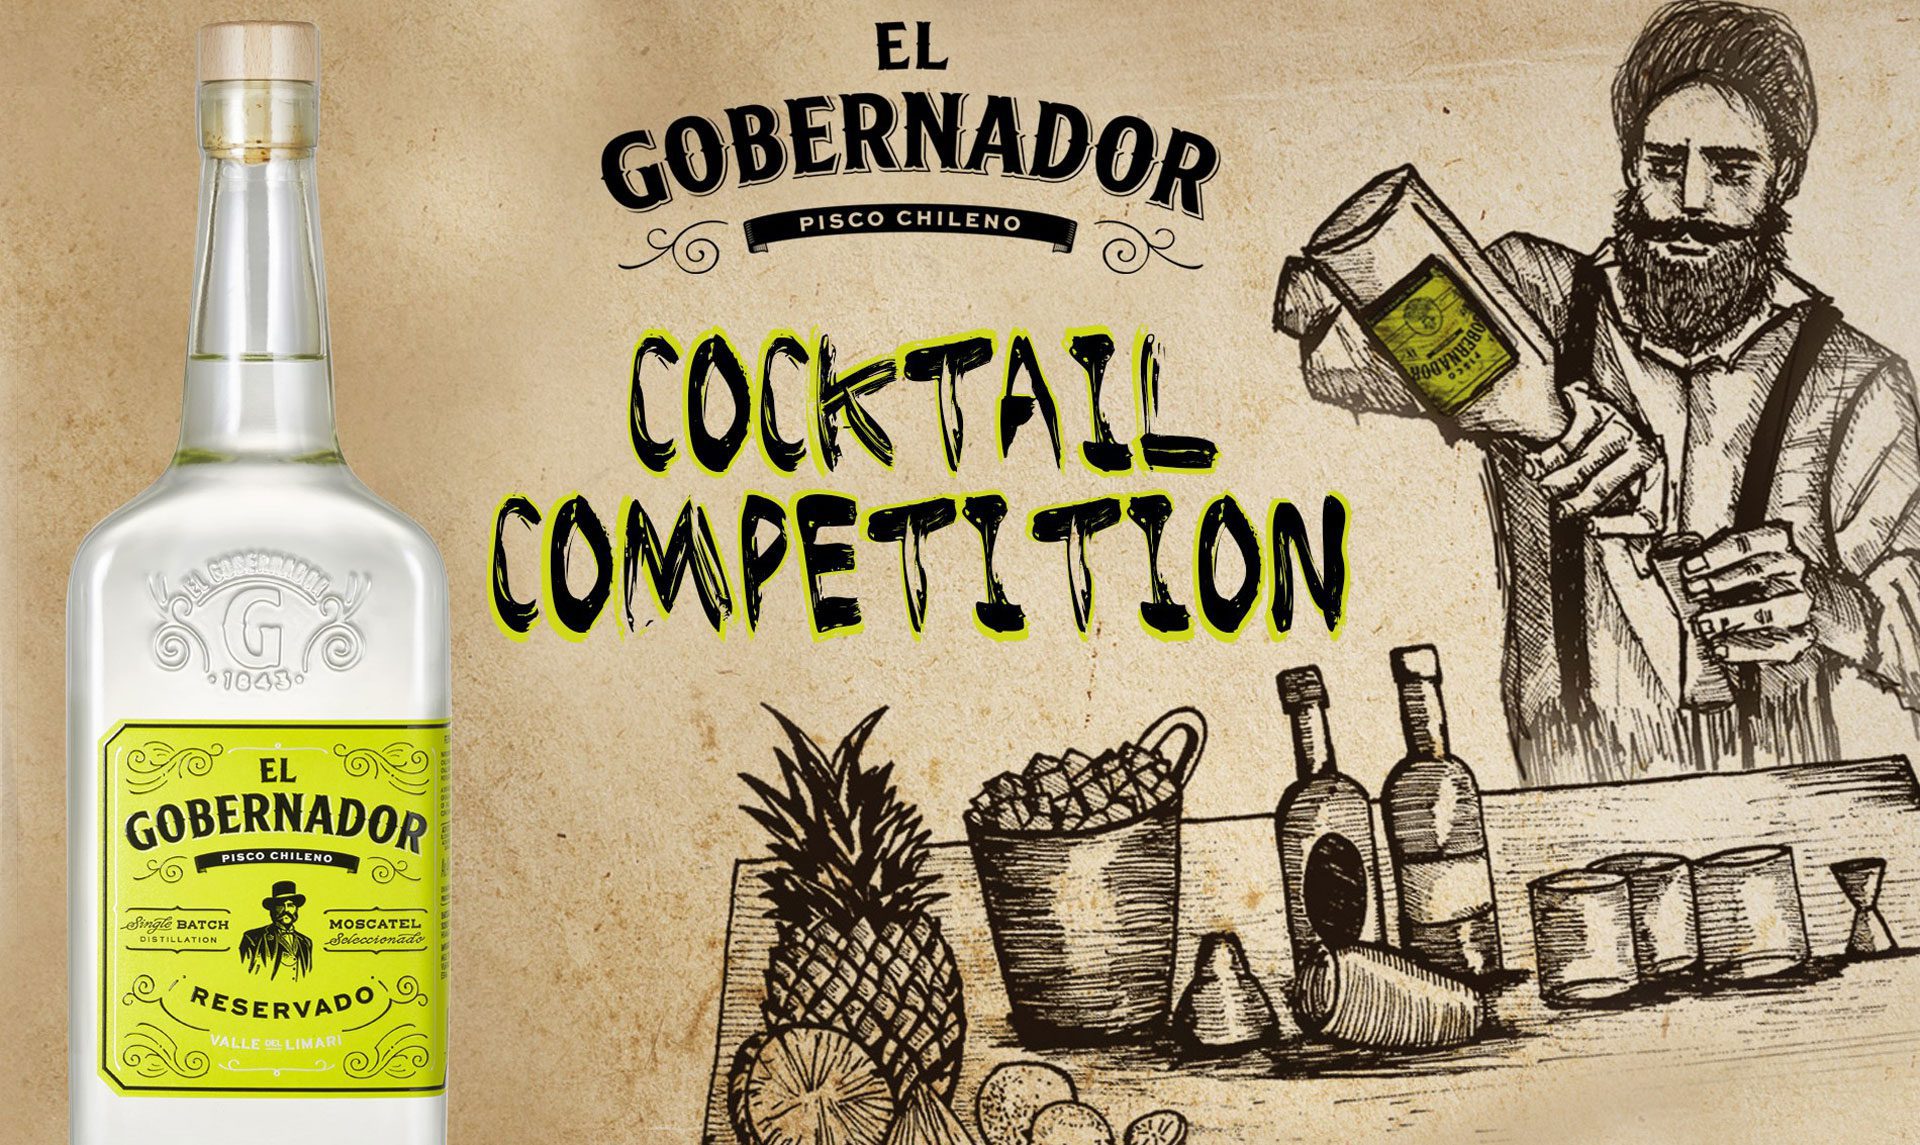 El Gobernador Cocktail Competition